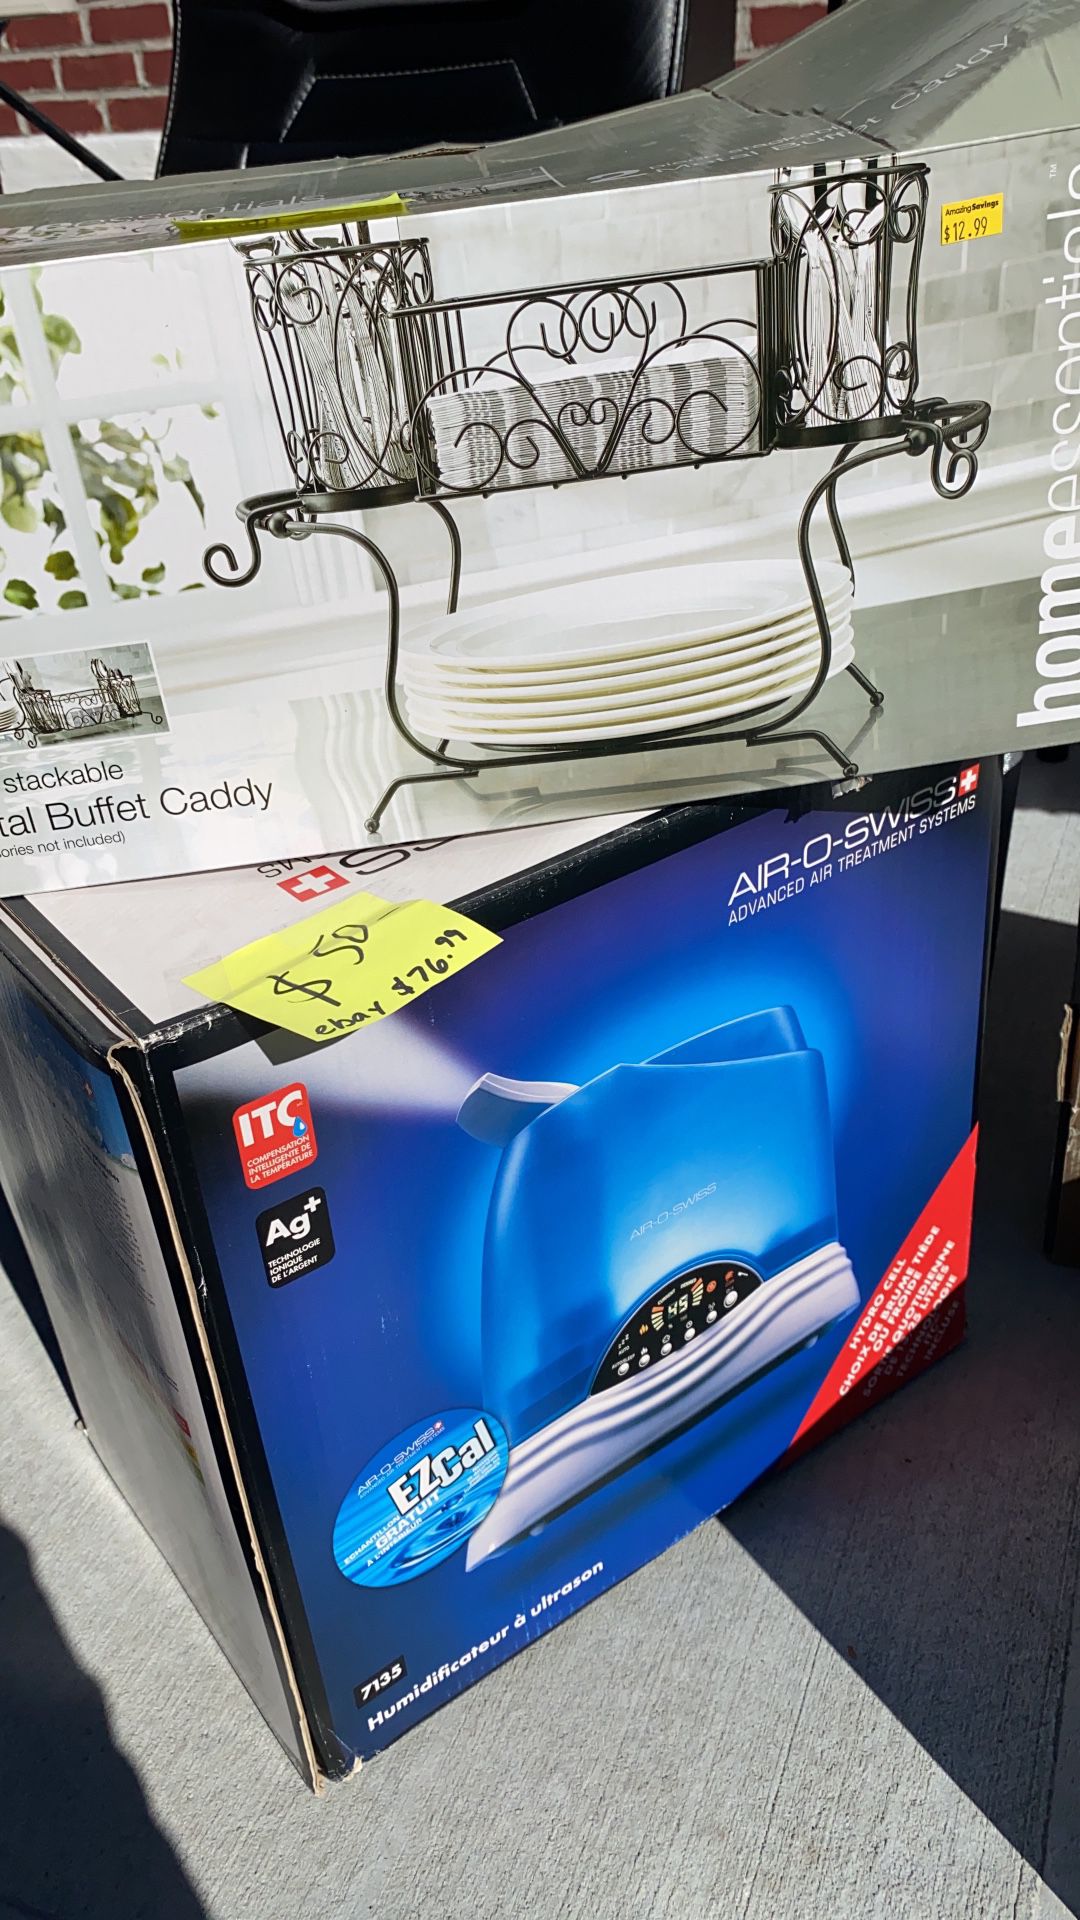 Air-O-Swiss Humidifier New in Box!